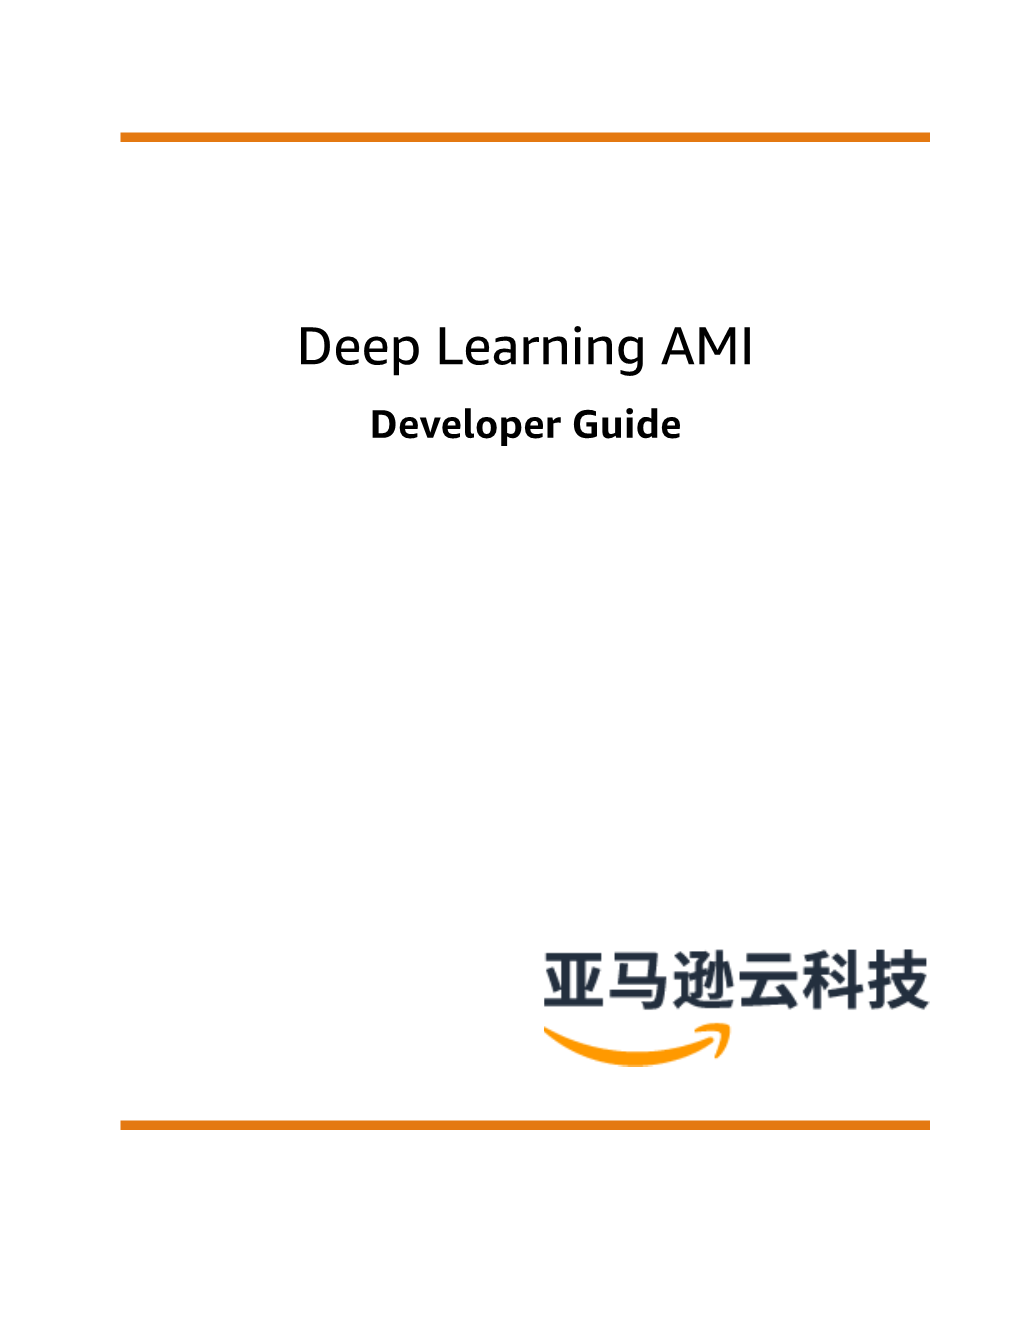 Deep Learning AMI Developer Guide Deep Learning AMI Developer Guide